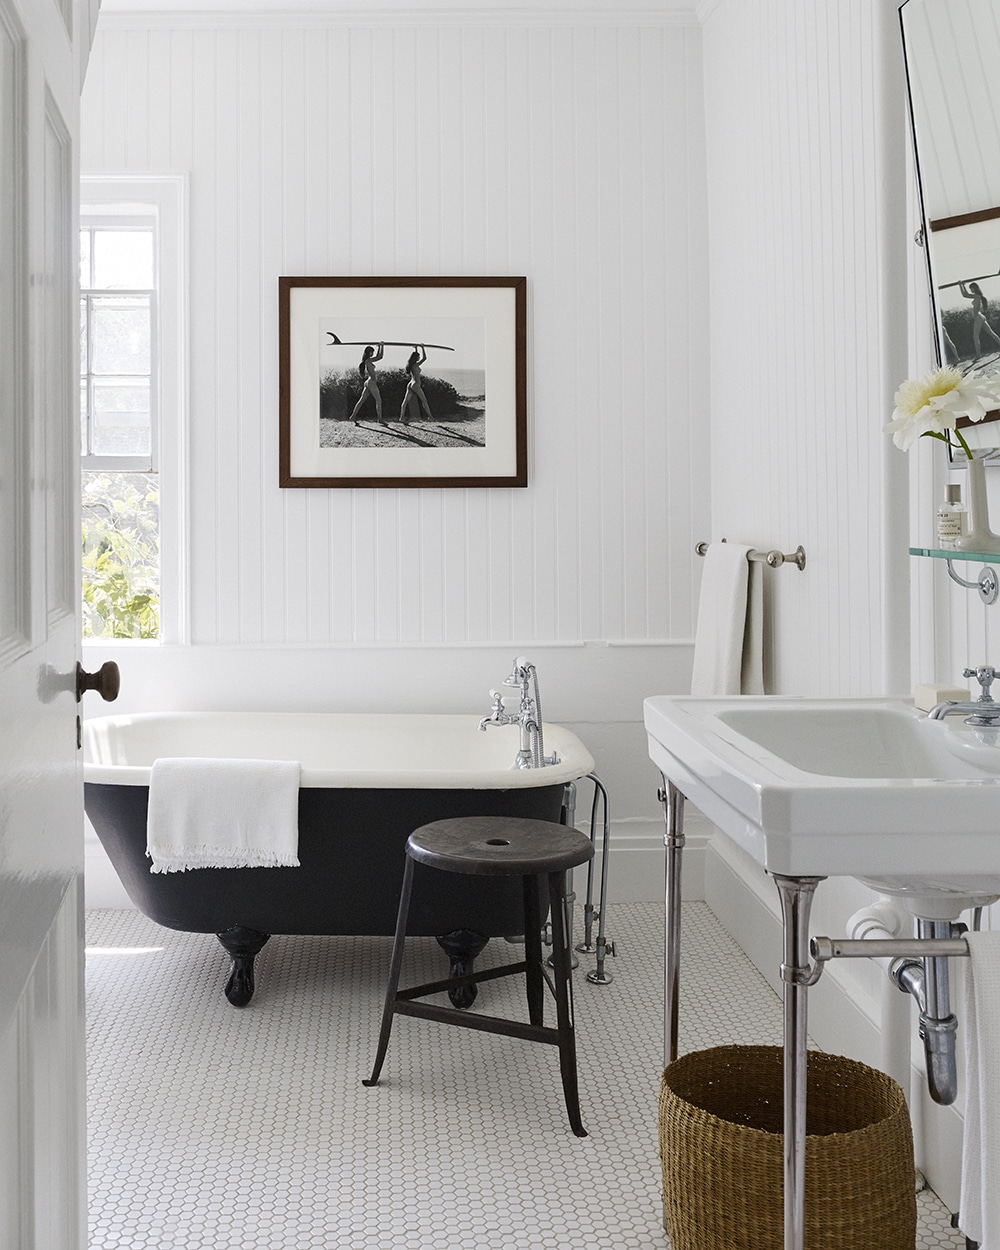 Mark Cunningham designed Southampton home -bathroom, bathroom design, bathroom decor, black and white, black and white bathroom